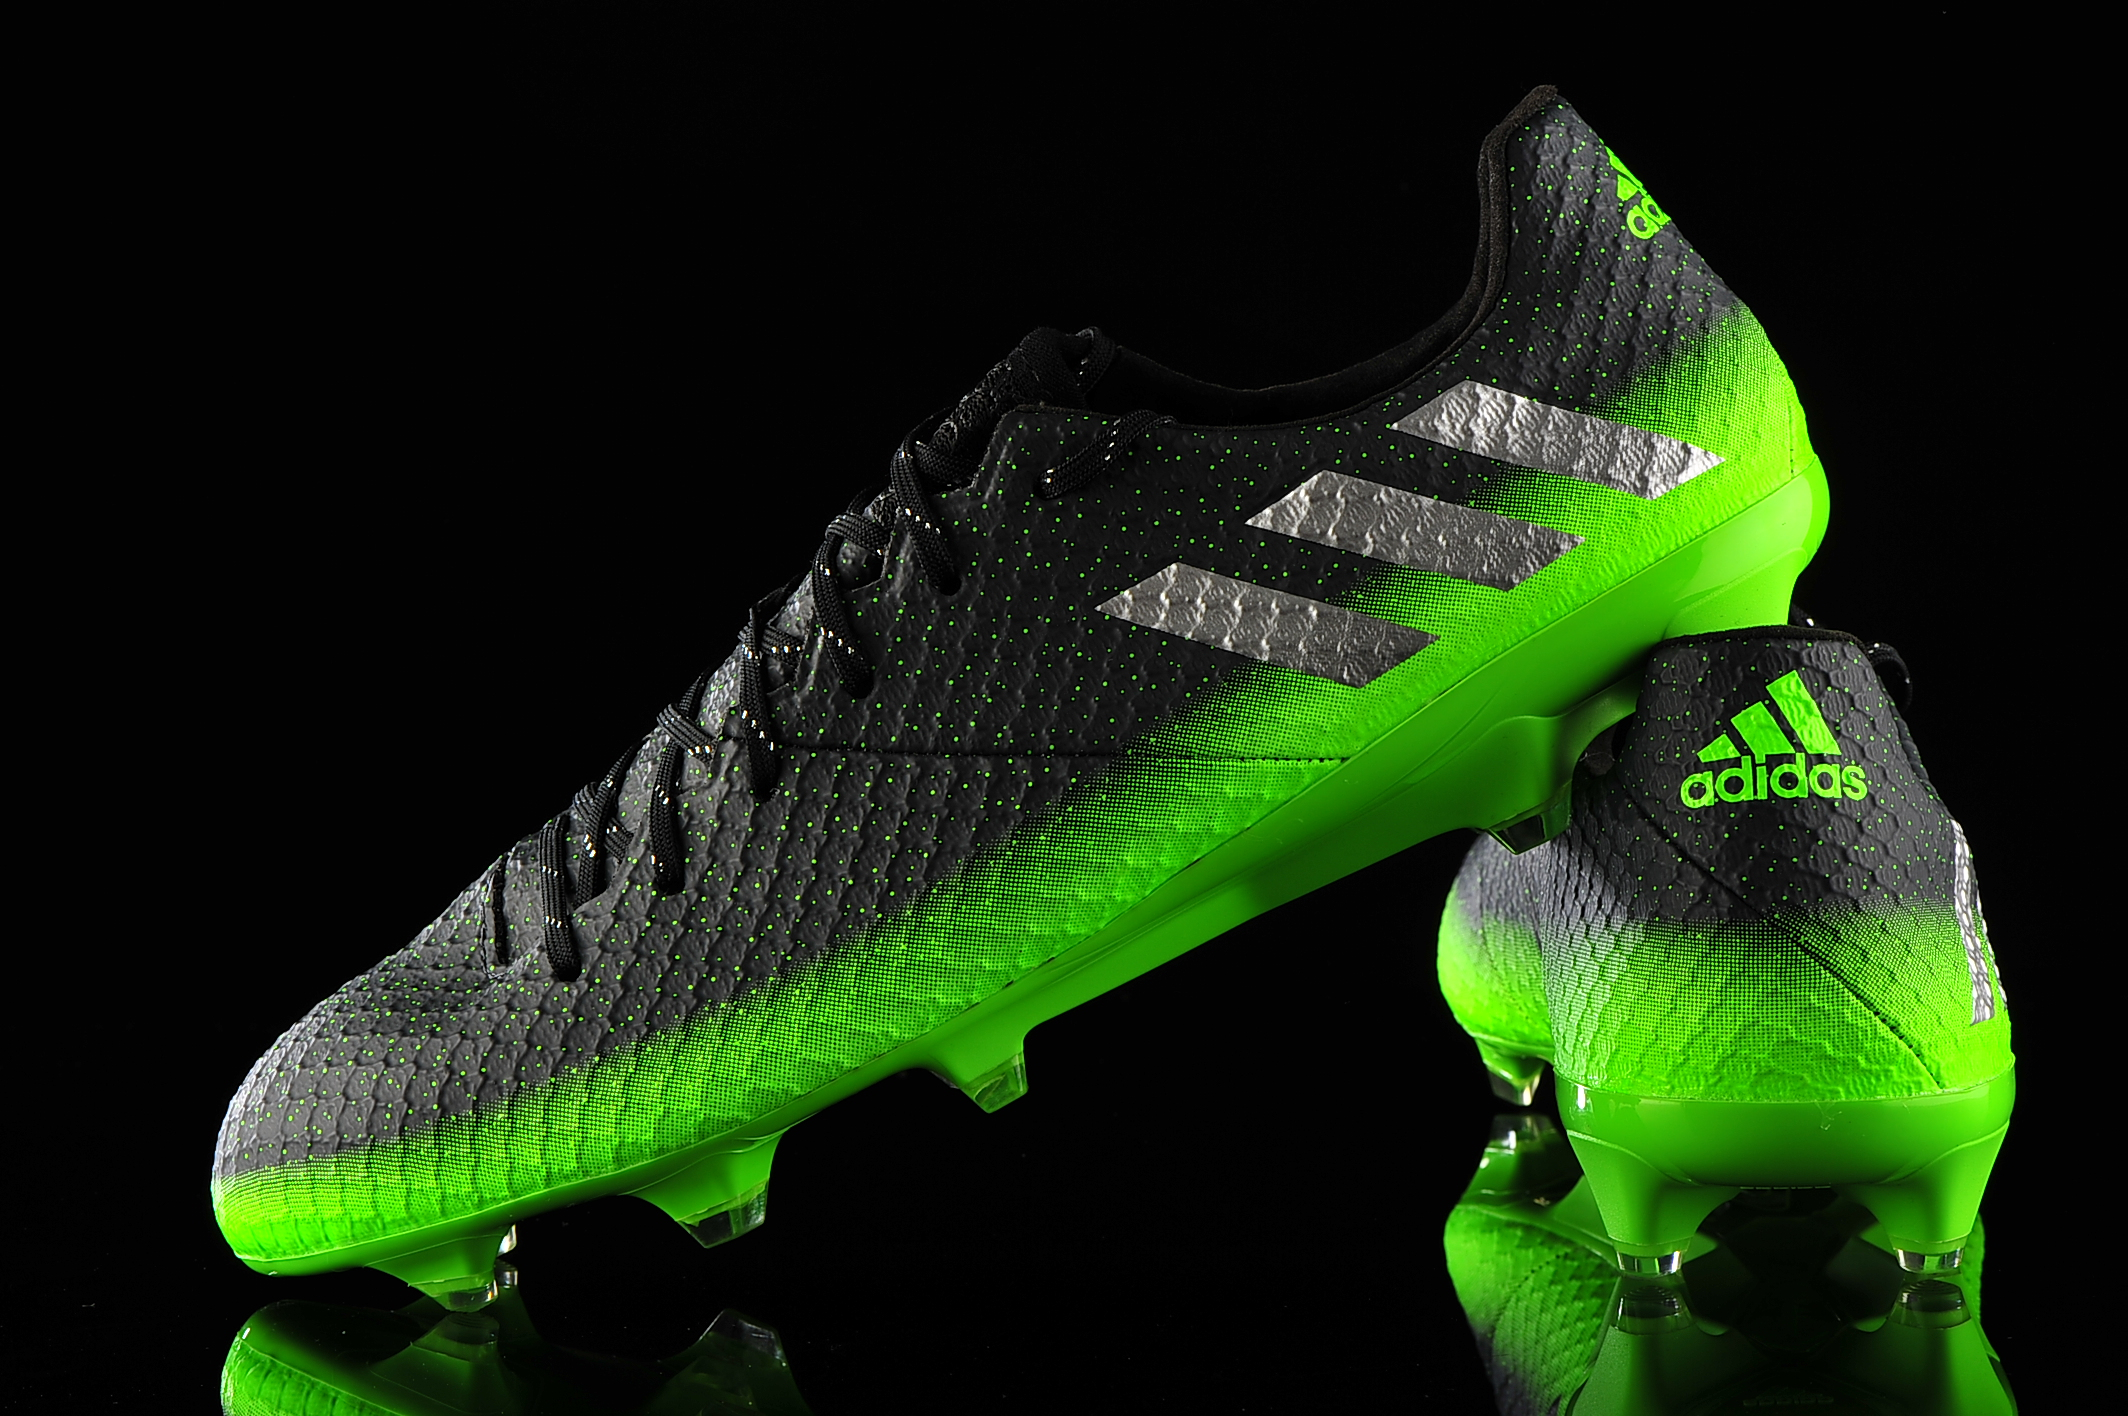 adidas Messi 16.1 FG S79625 | - Football boots & equipment